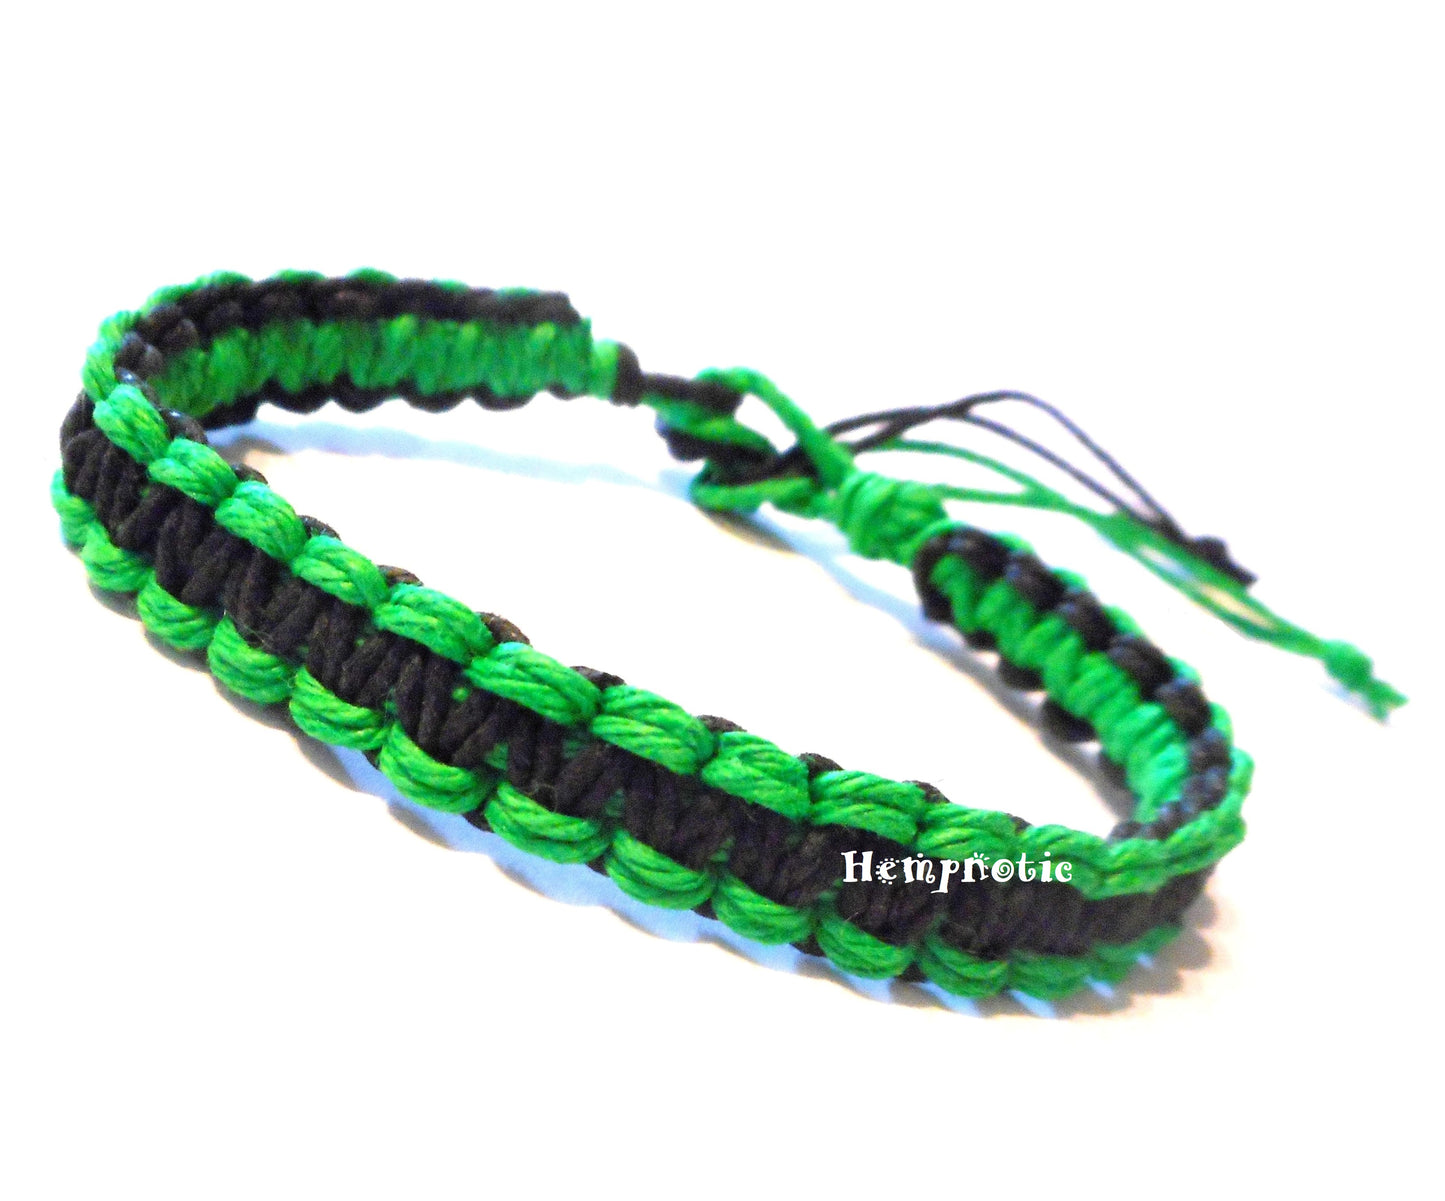 Green and Black Tie on Hemp Bracelet or Hemp Anklet